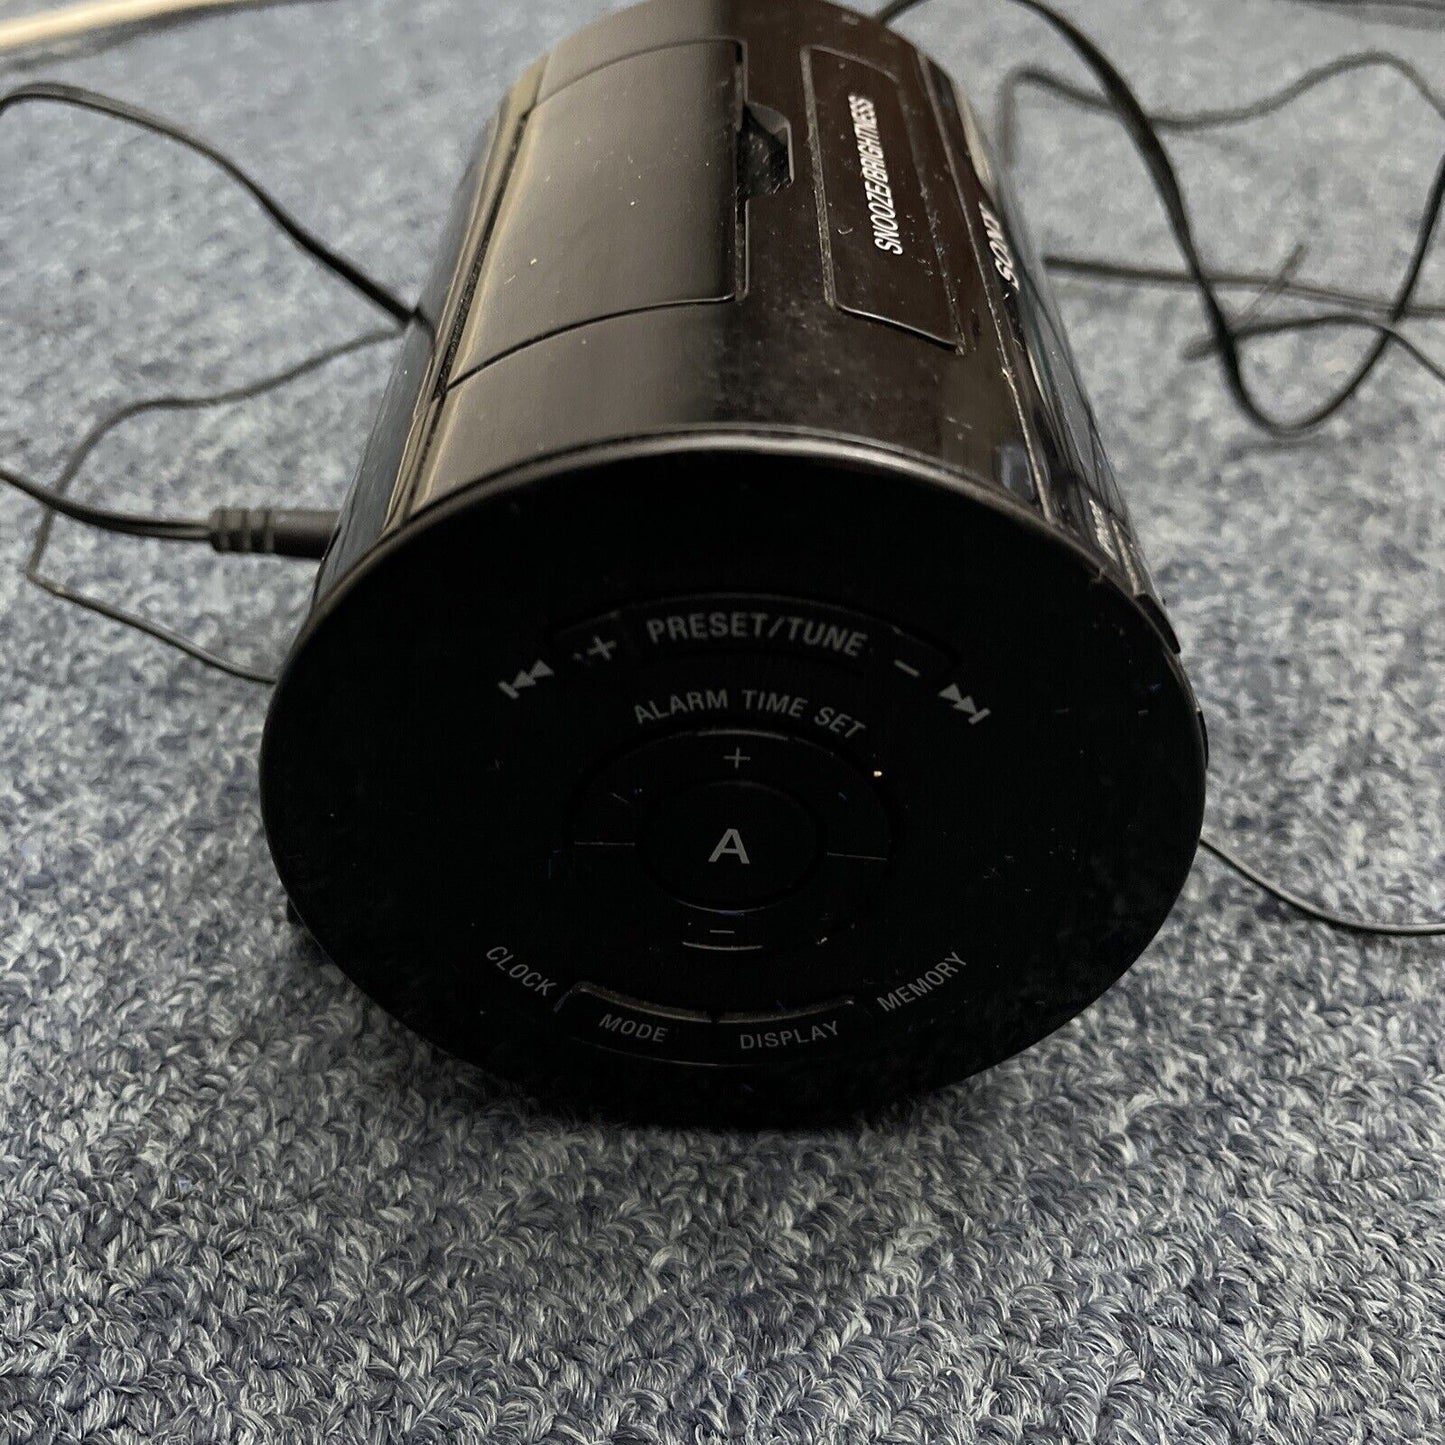 Sony ICF-C11iP Alarm Clock AM/FM Radio Lightning Dock Speaker Snooze Function